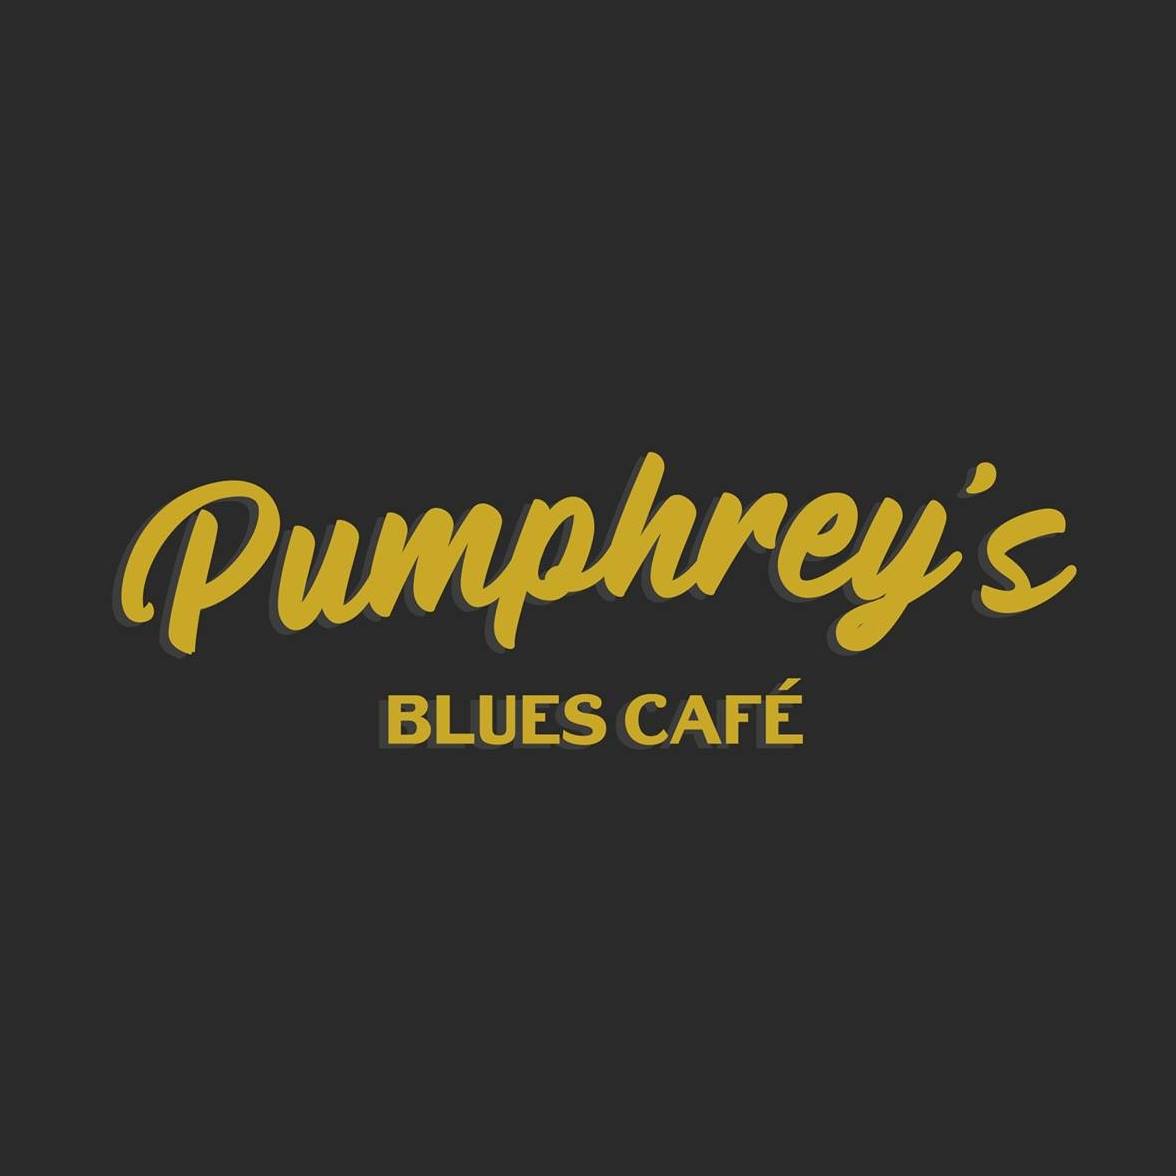 Blues Cafe Newcastle